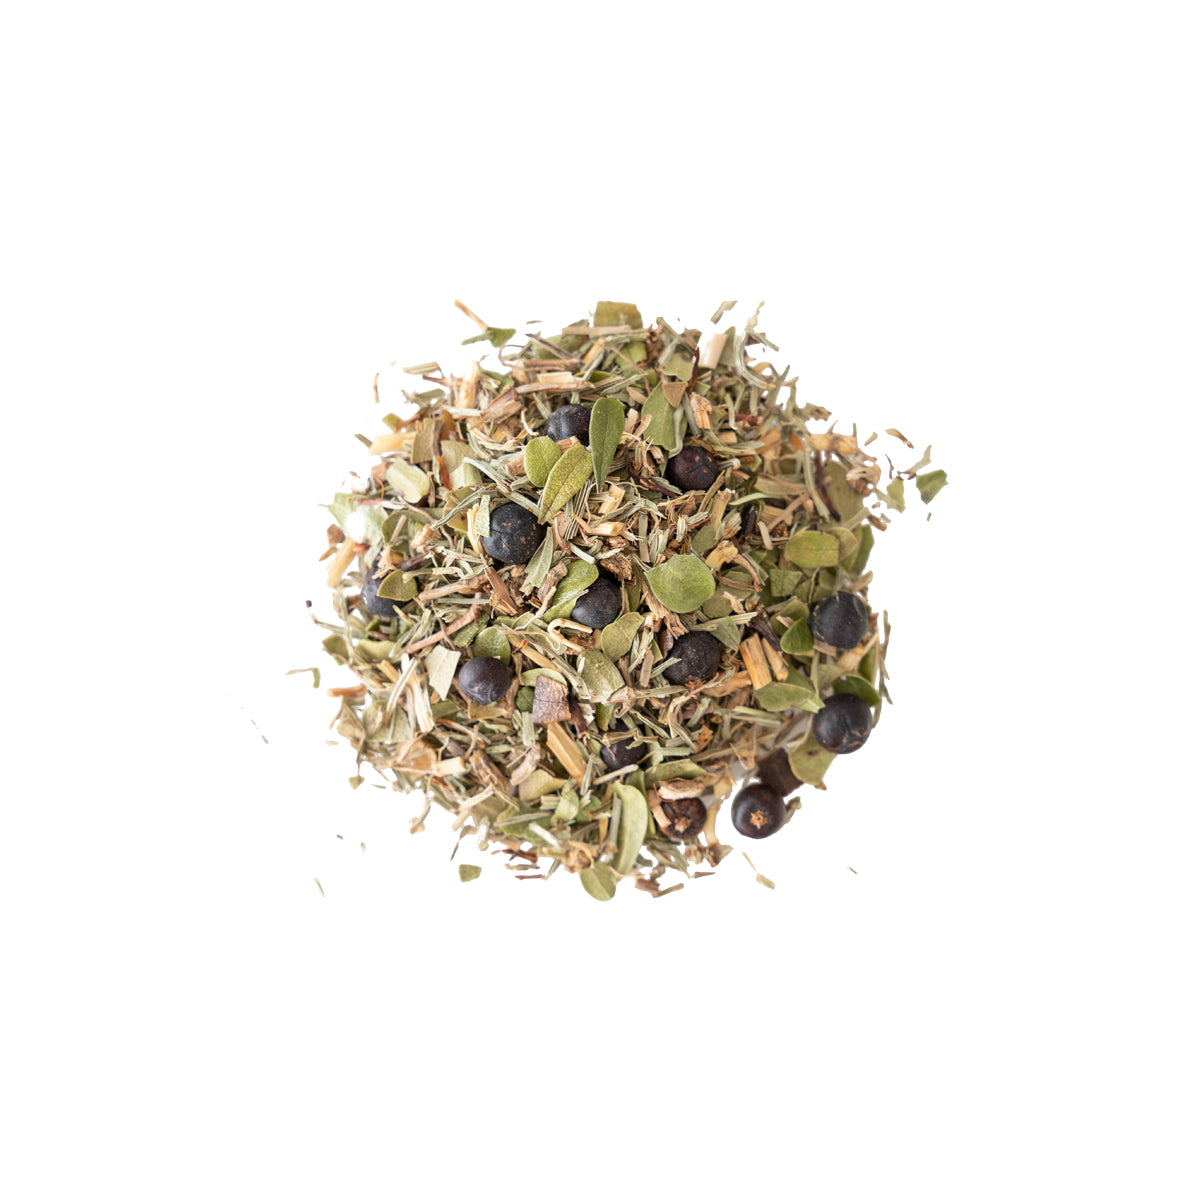 Primary Image of Nieren-Blasentee (Kidney-Bladder Tea)